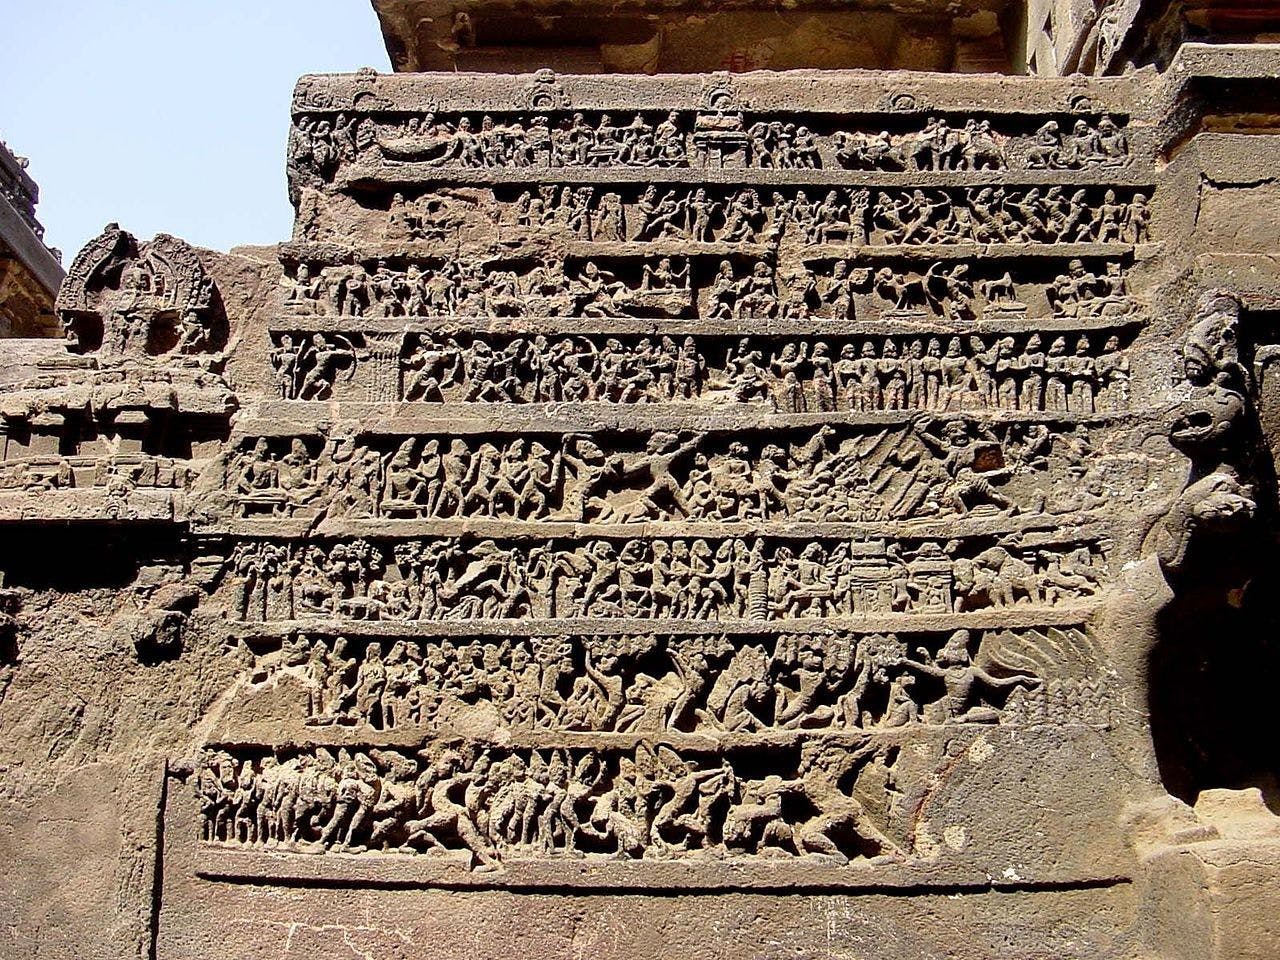 The Ramayana panel